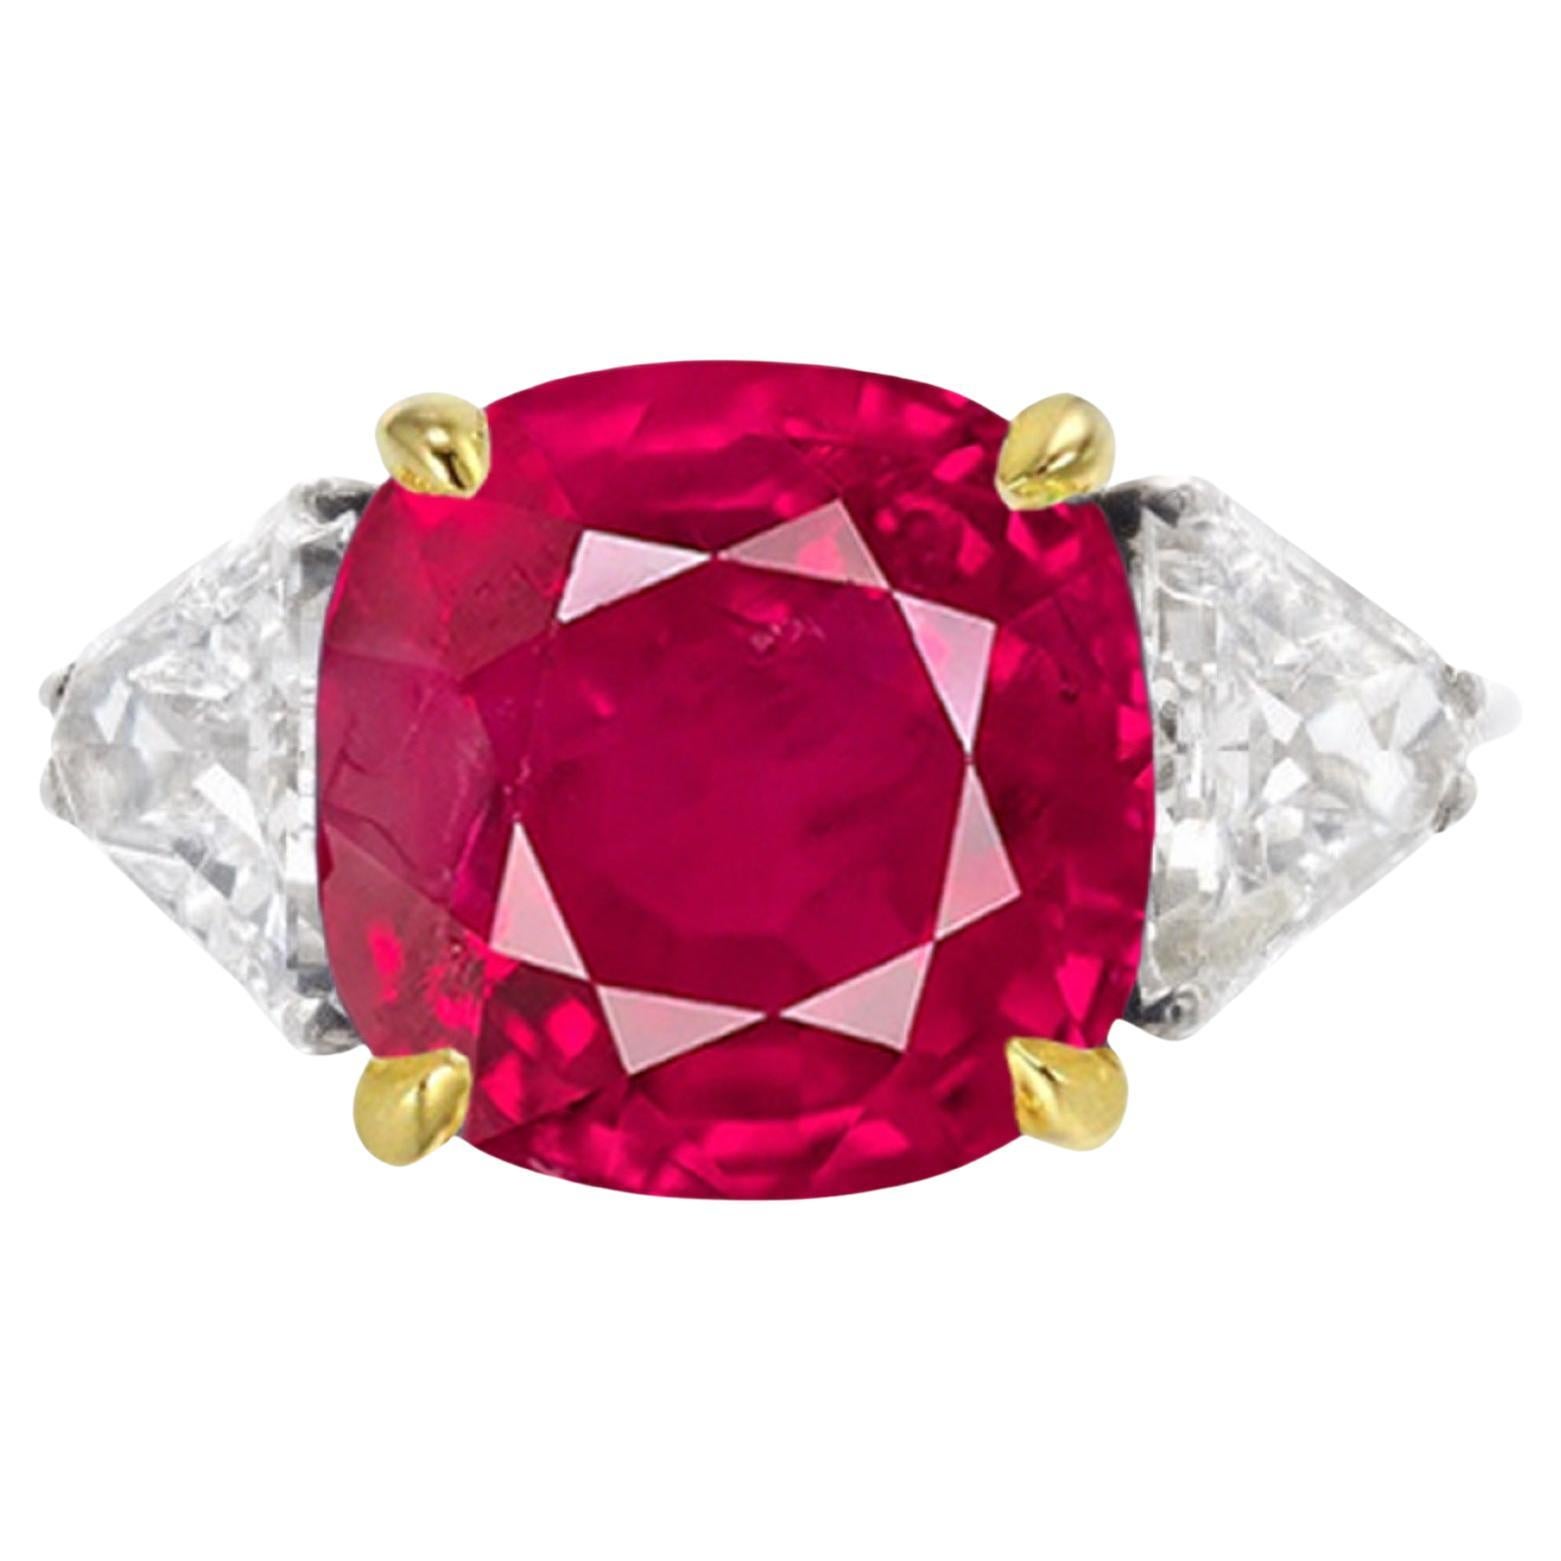 Certified Burma Red Ruby 4.55 Carat Natural No Heat Ruby Diamond Ring